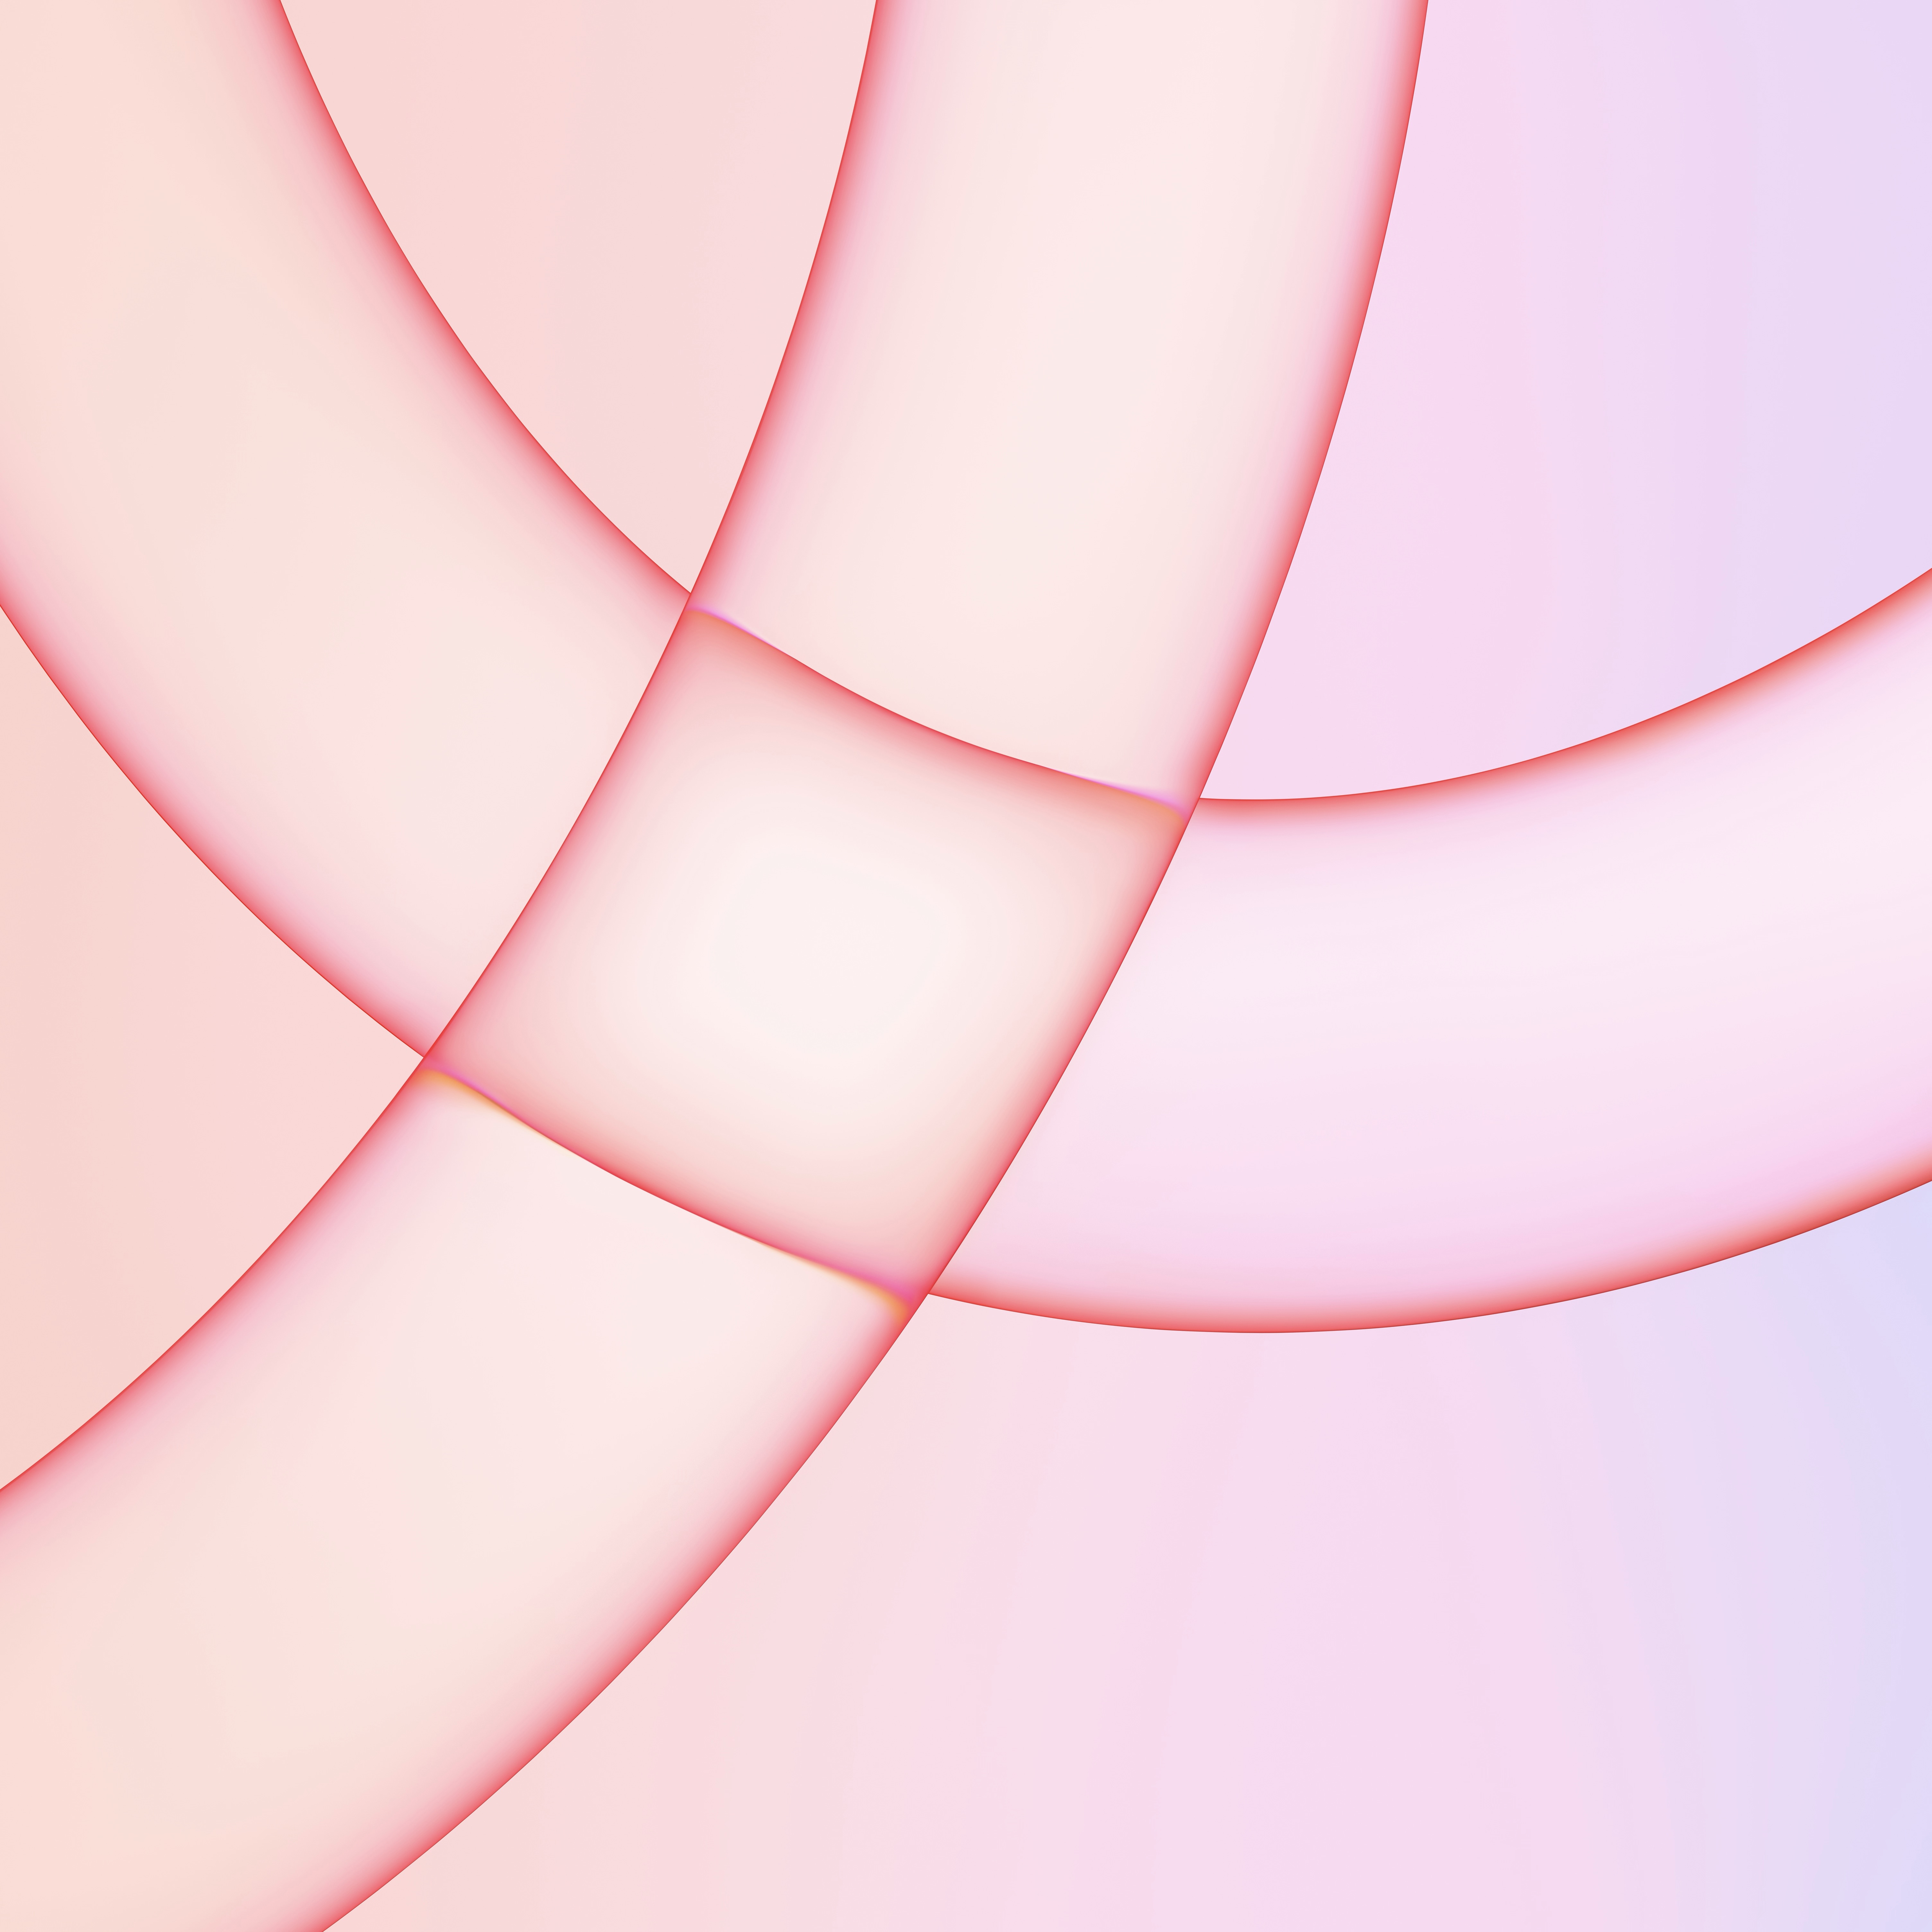 HD wallpaper, Imac 2021, 5K, Pink Background, Apple Event 2021, Stock